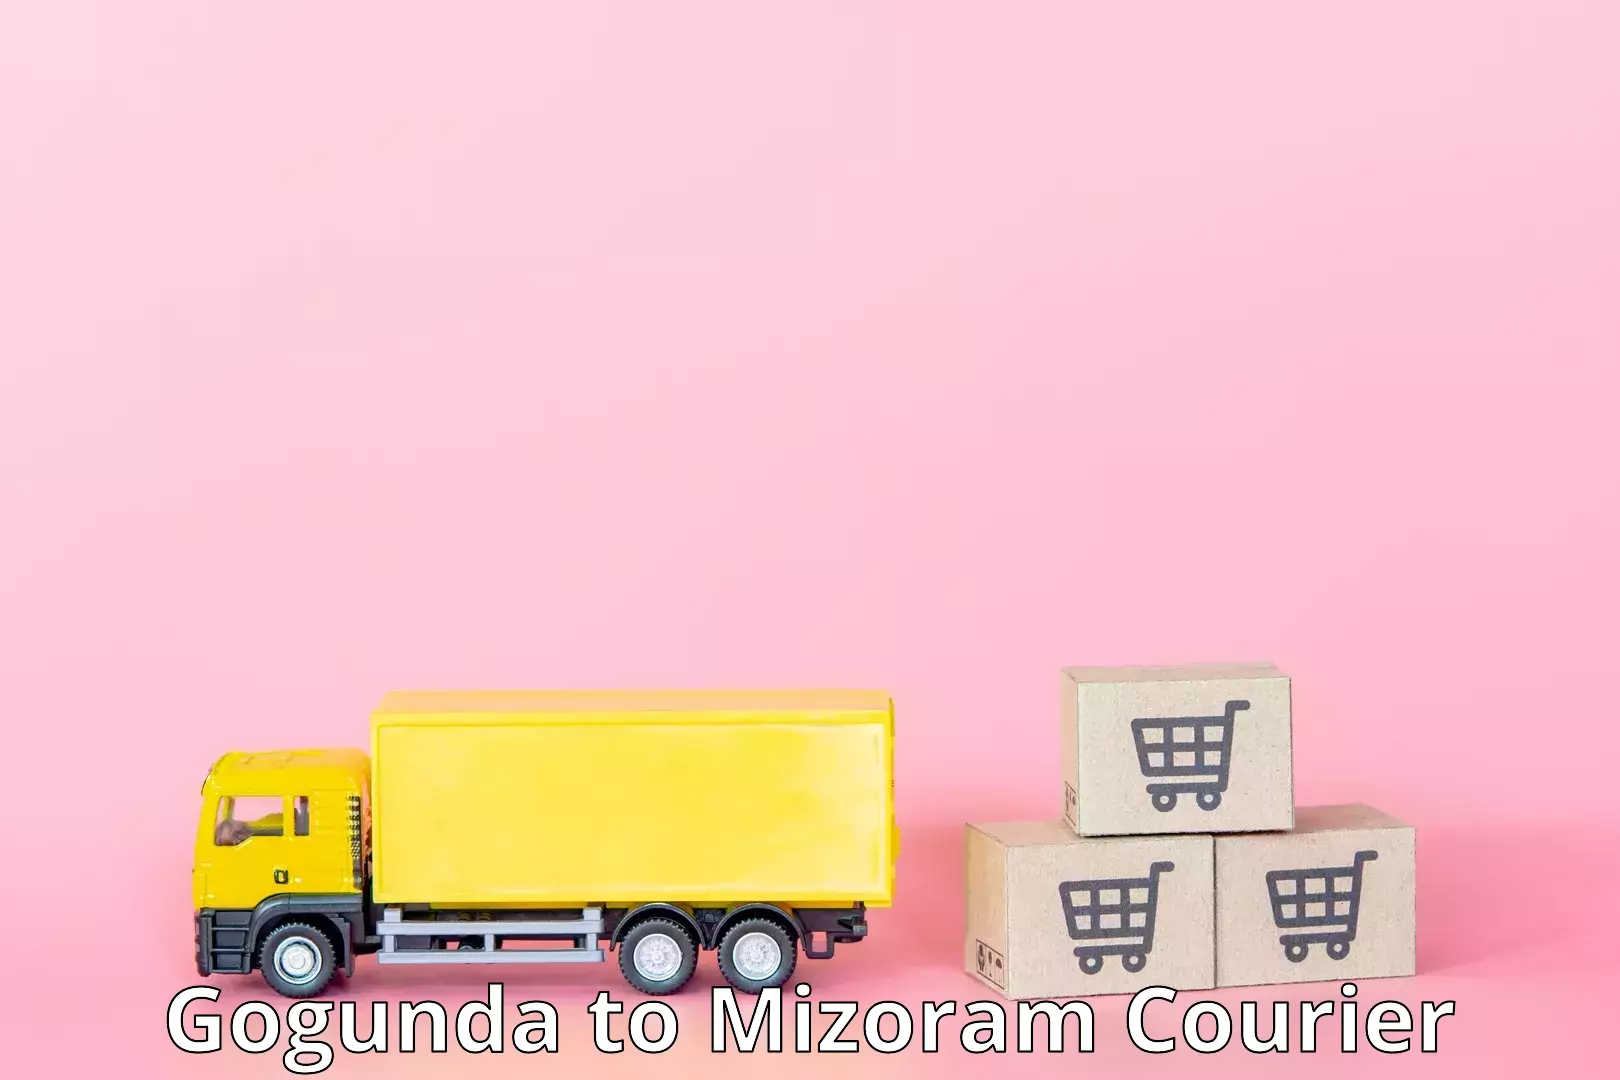 Automated parcel services Gogunda to Mizoram